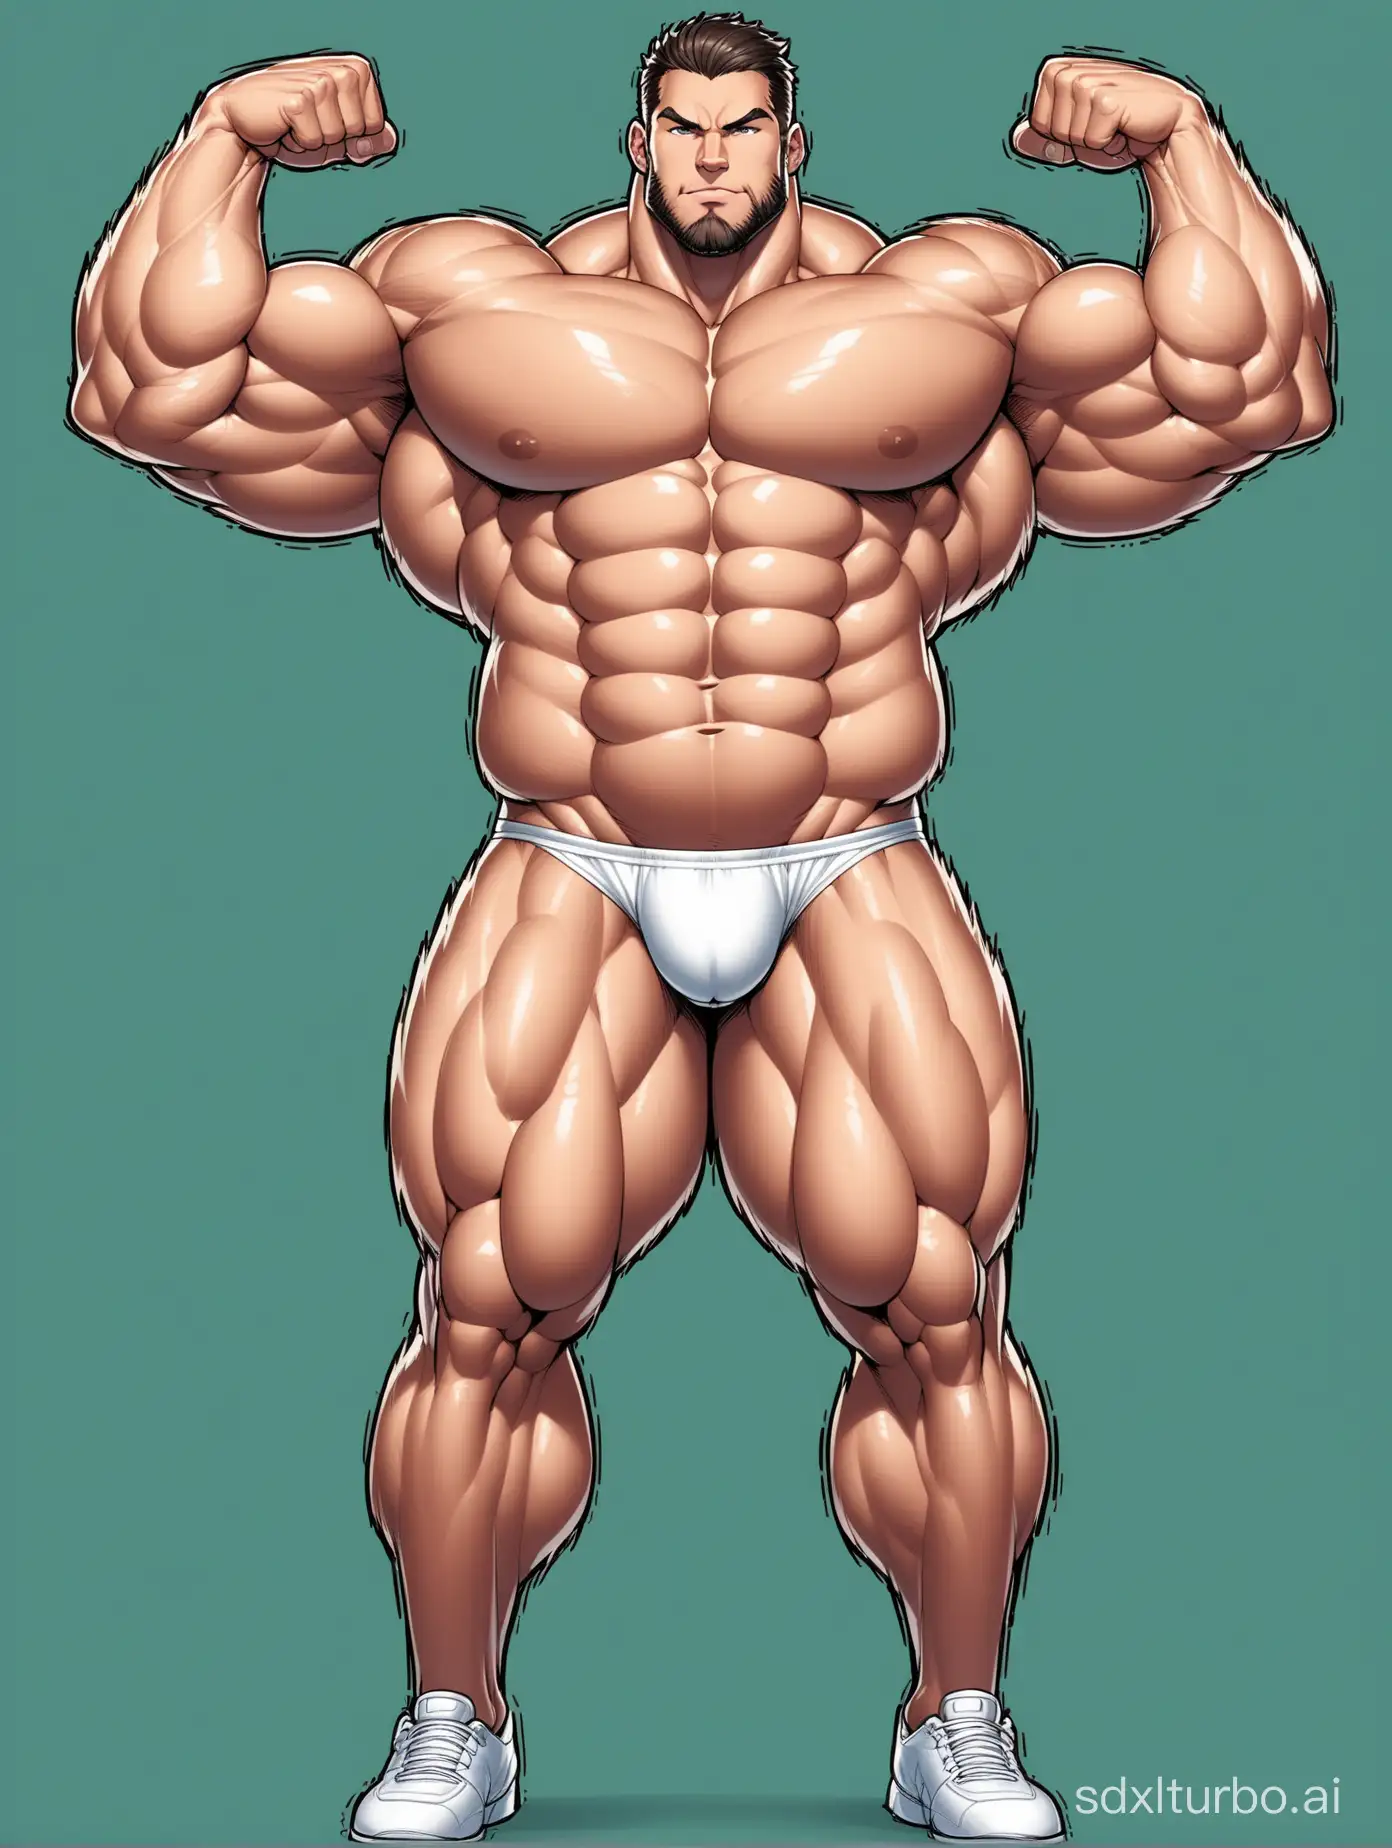 Massive-Muscle-Stud-Showing-Huge-Biceps-in-White-Underwear